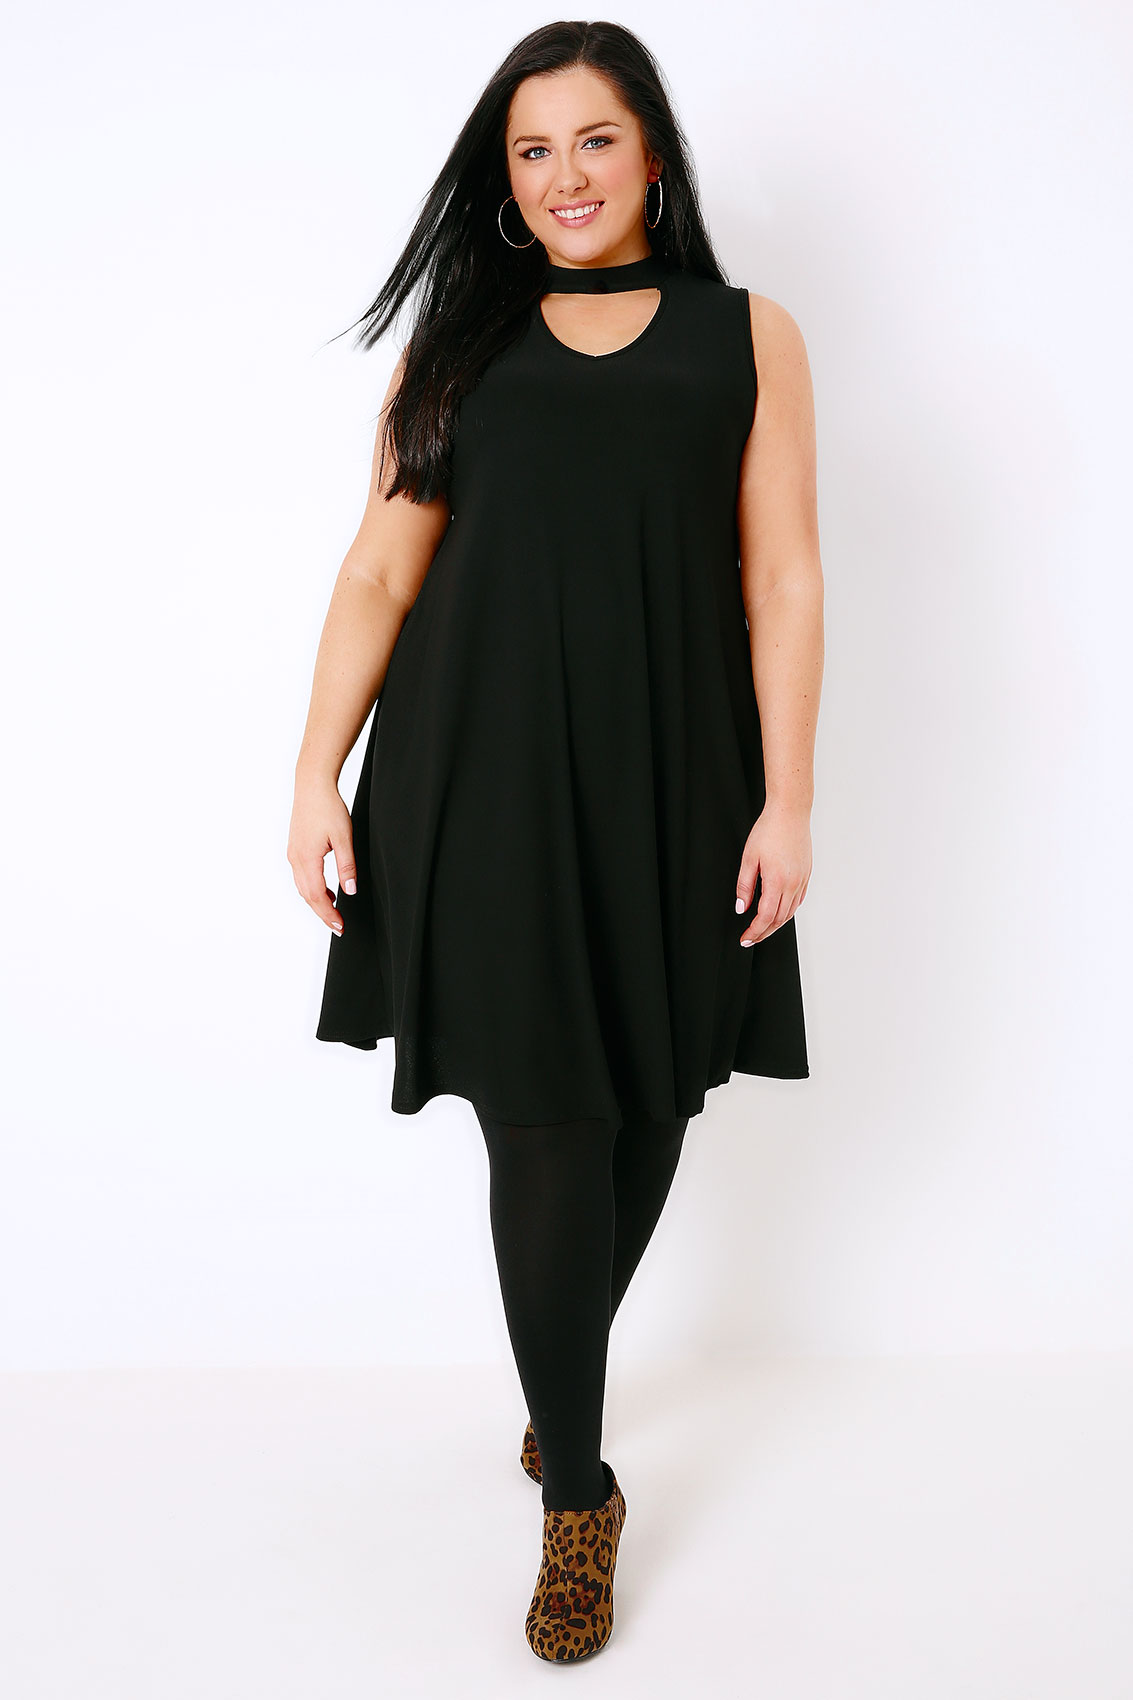 Black Sleeveless Swing Dress With Choker Neckline, Plus Size 16 to 36